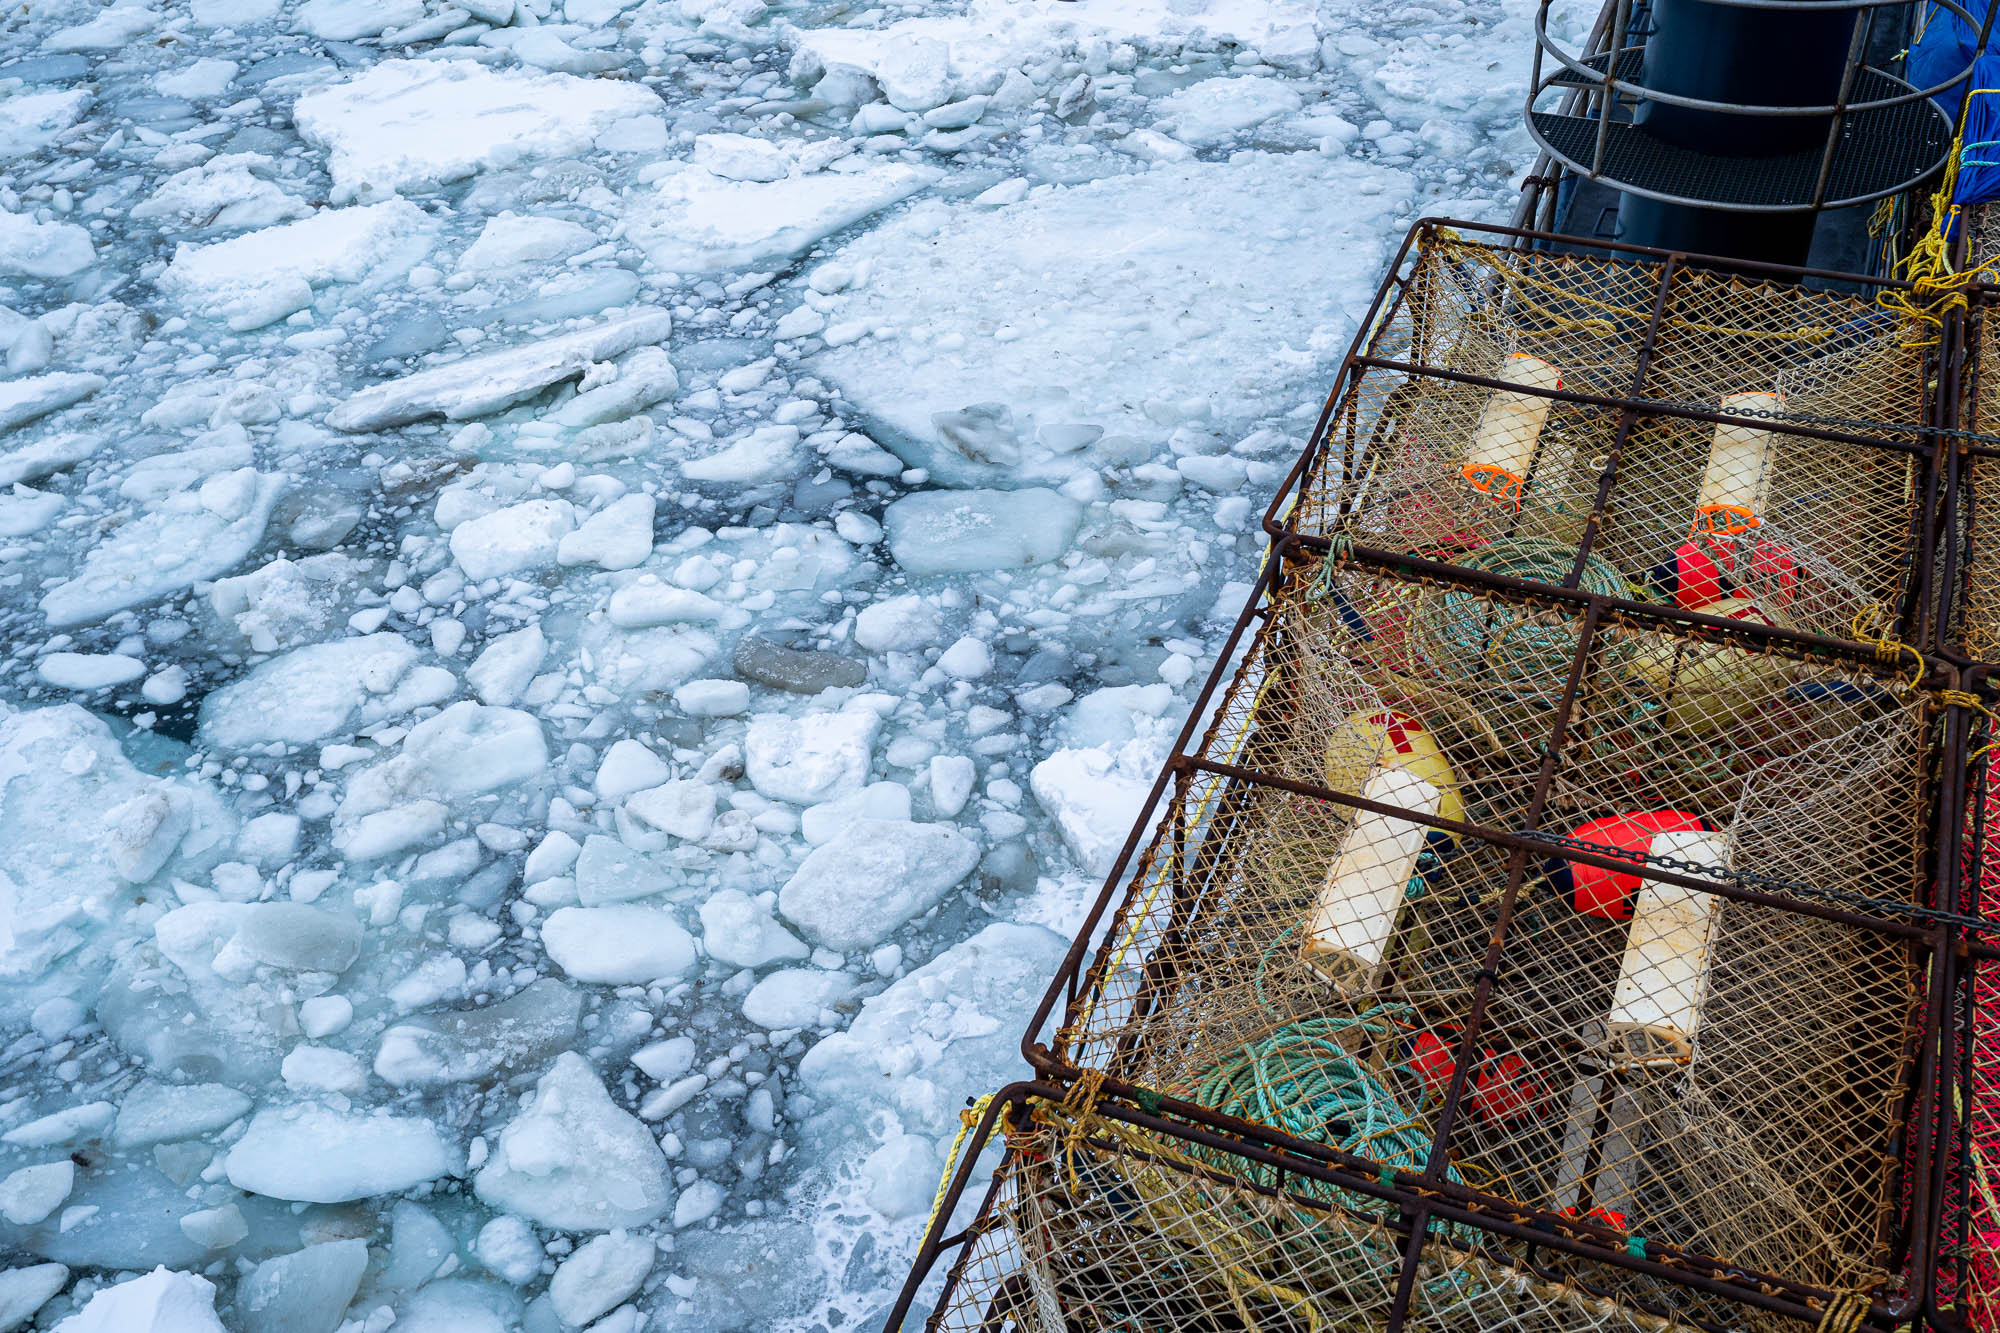 Alaska snow crab fishery saw steep decline. This reporter went